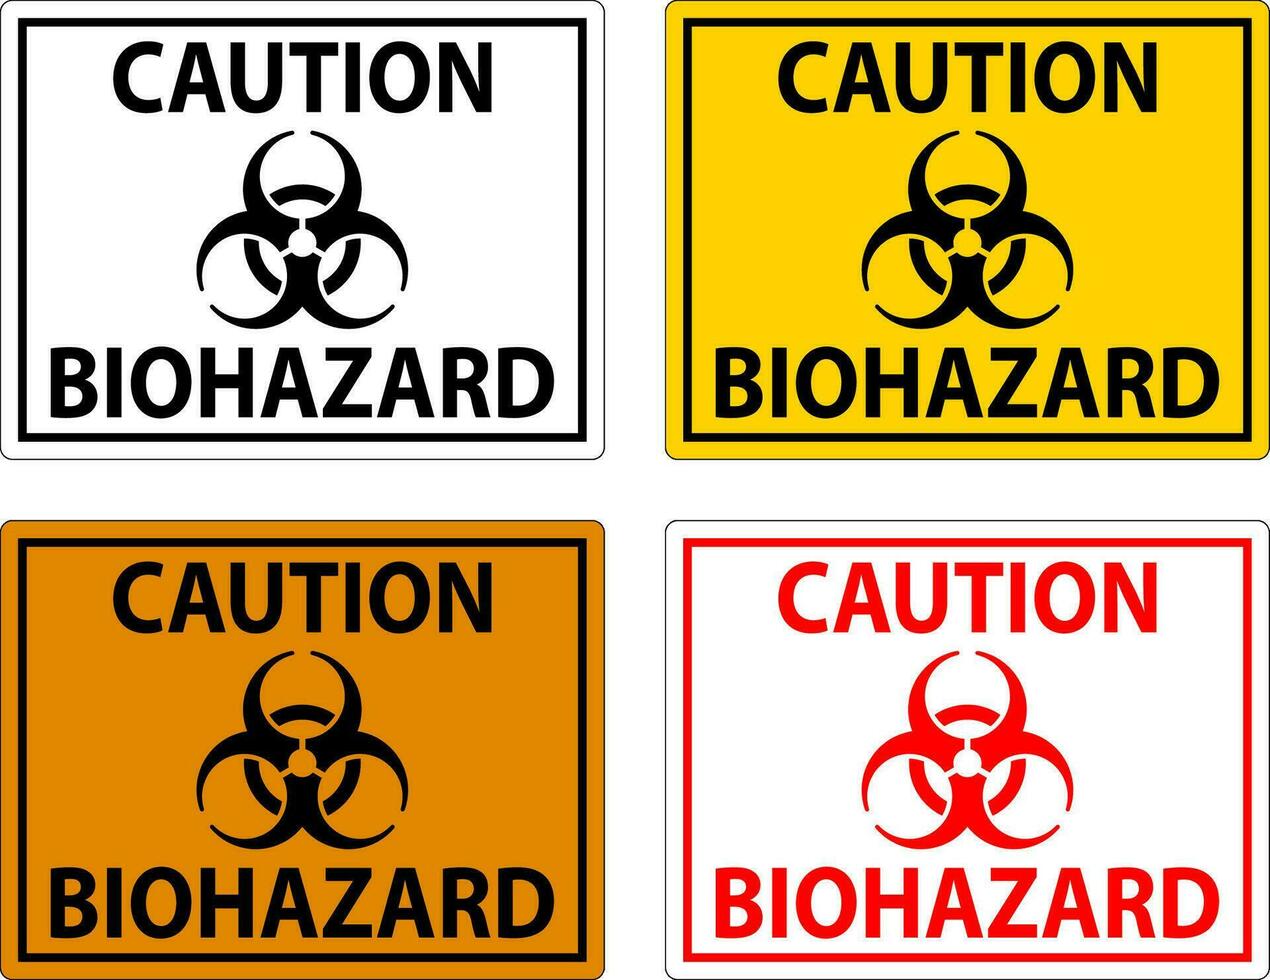 Biohazard Sign, Caution Biohazard Sign vector